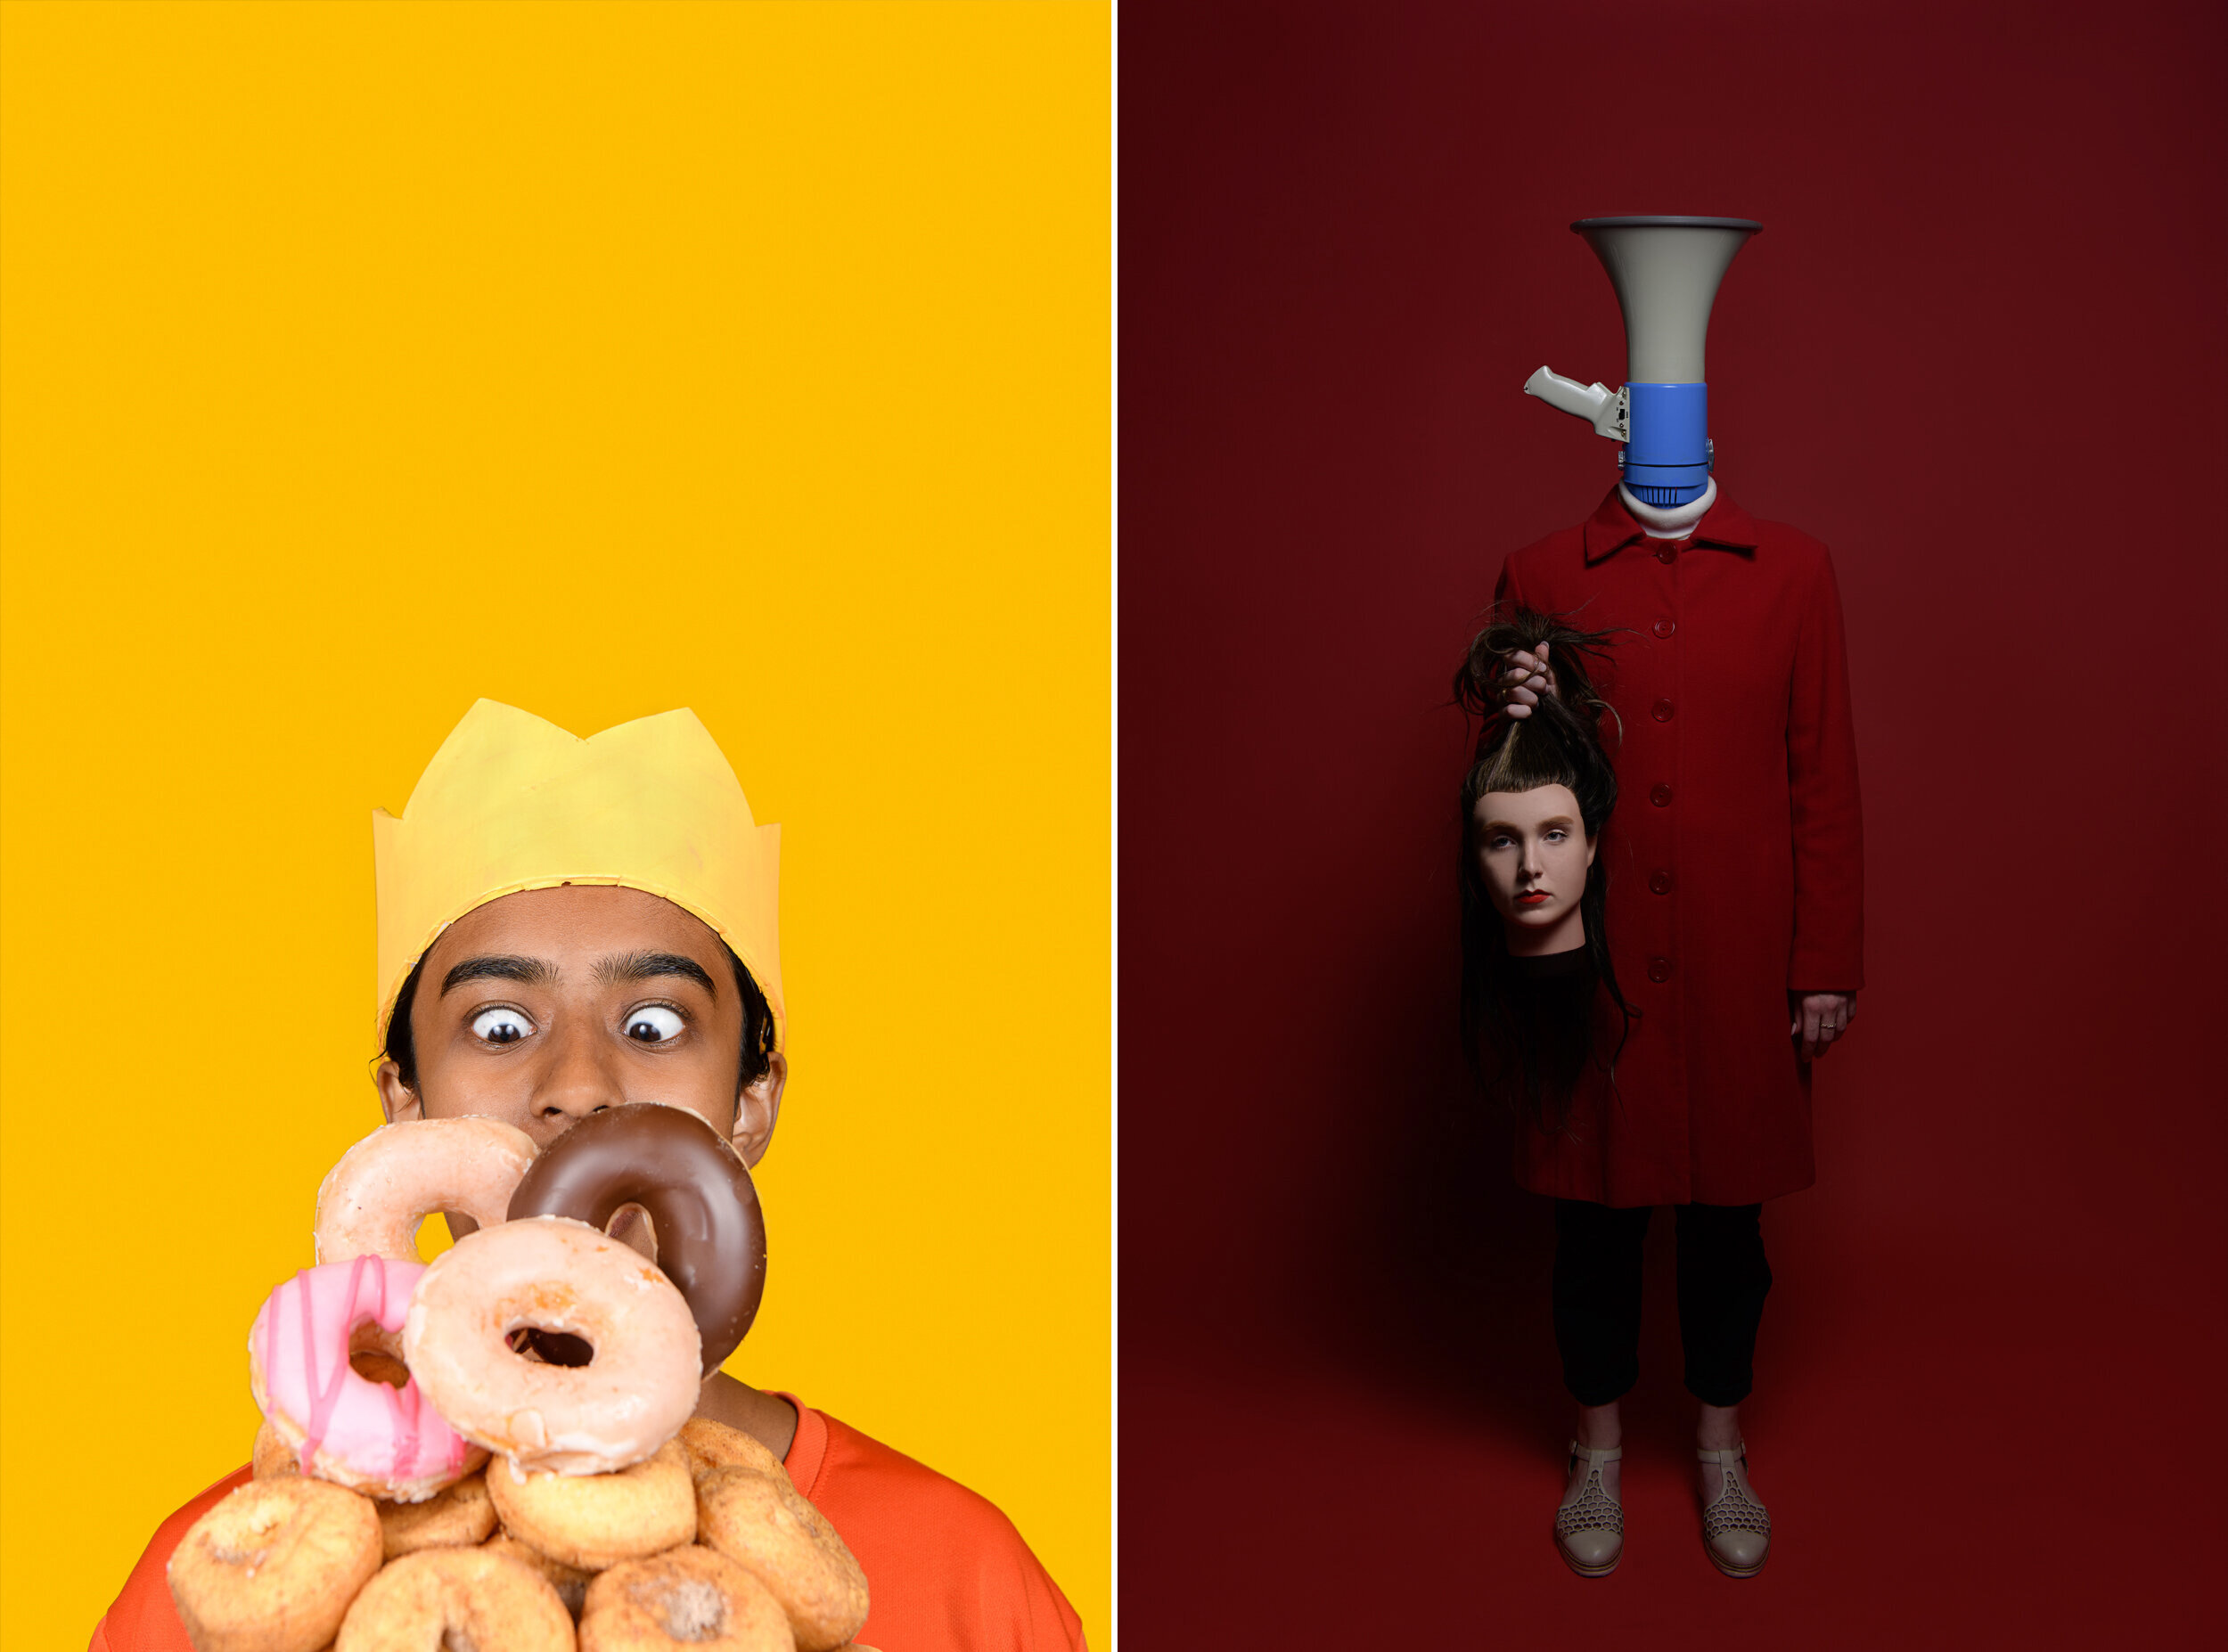  Promo images for Monash Uni Student Theatre, 2019. 